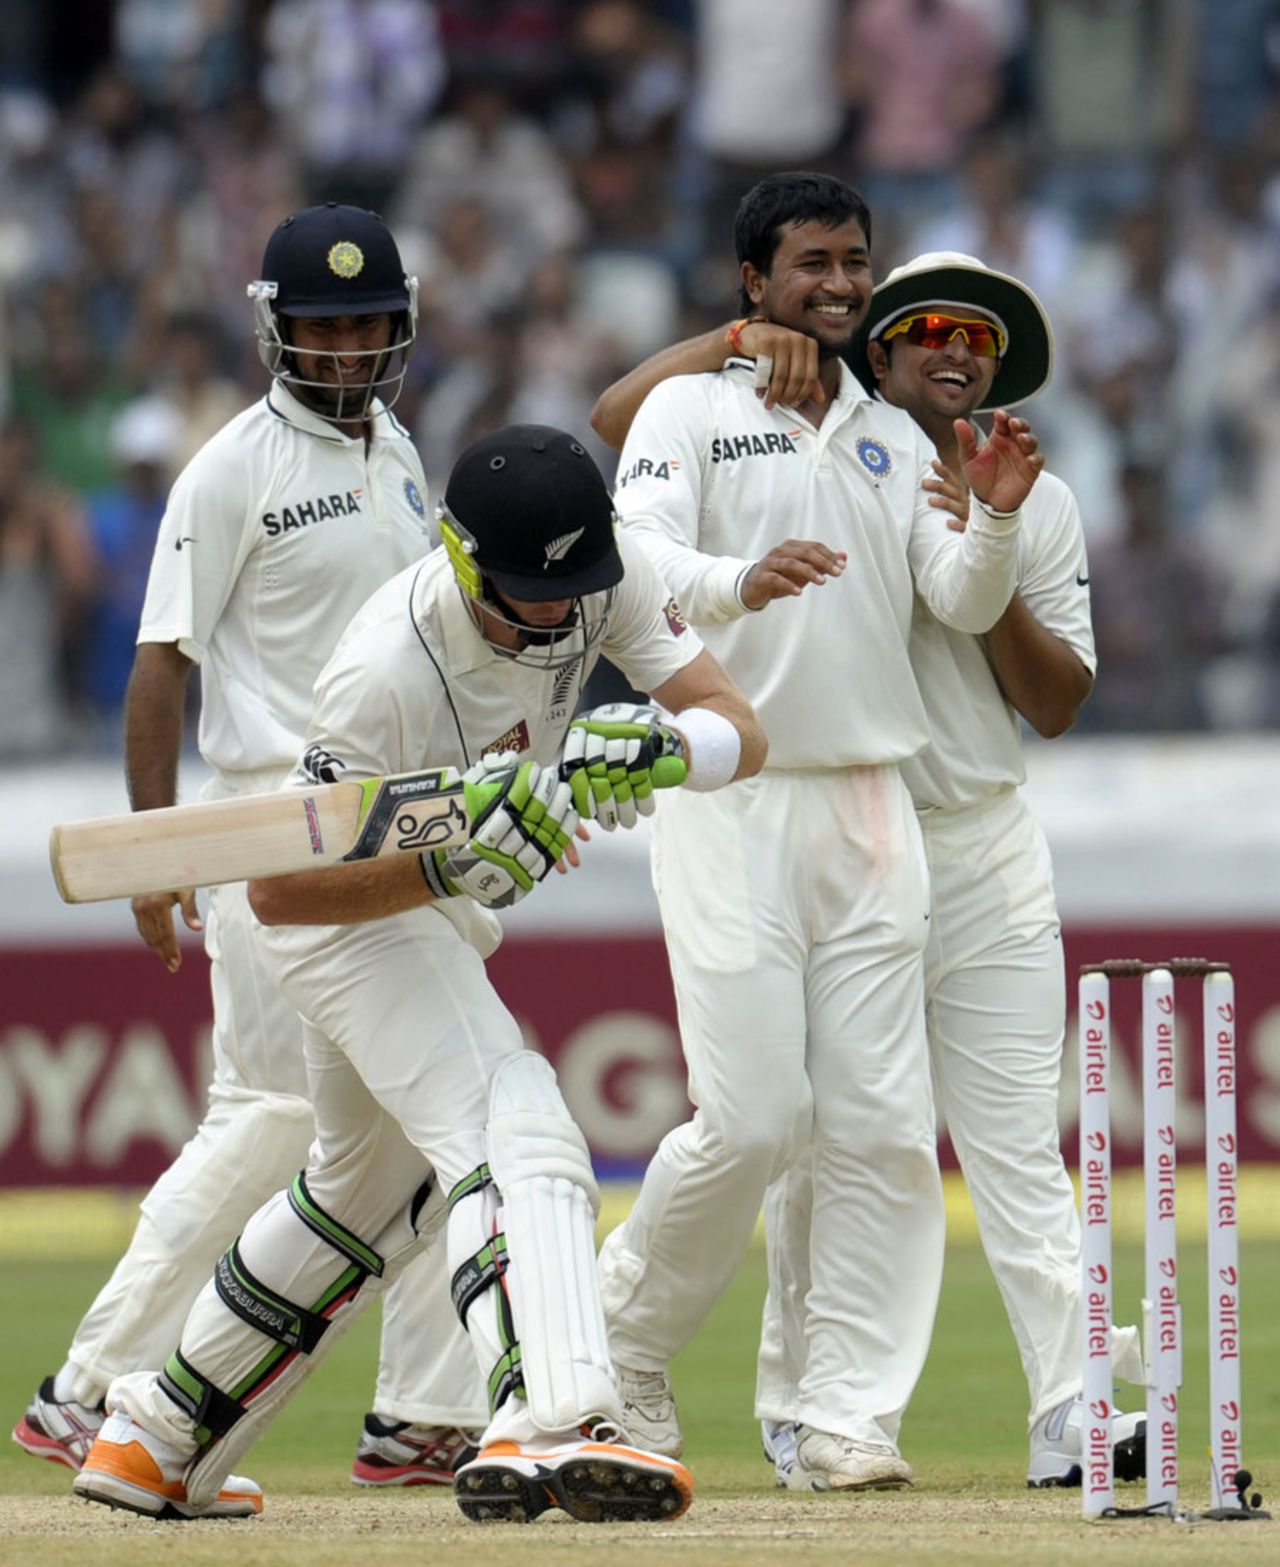 Martin Guptill was adjudged lbw off Pragyan Ojha, India v New Zealand, 1st Test, Hyderabad, 3rd day, August 25, 2012